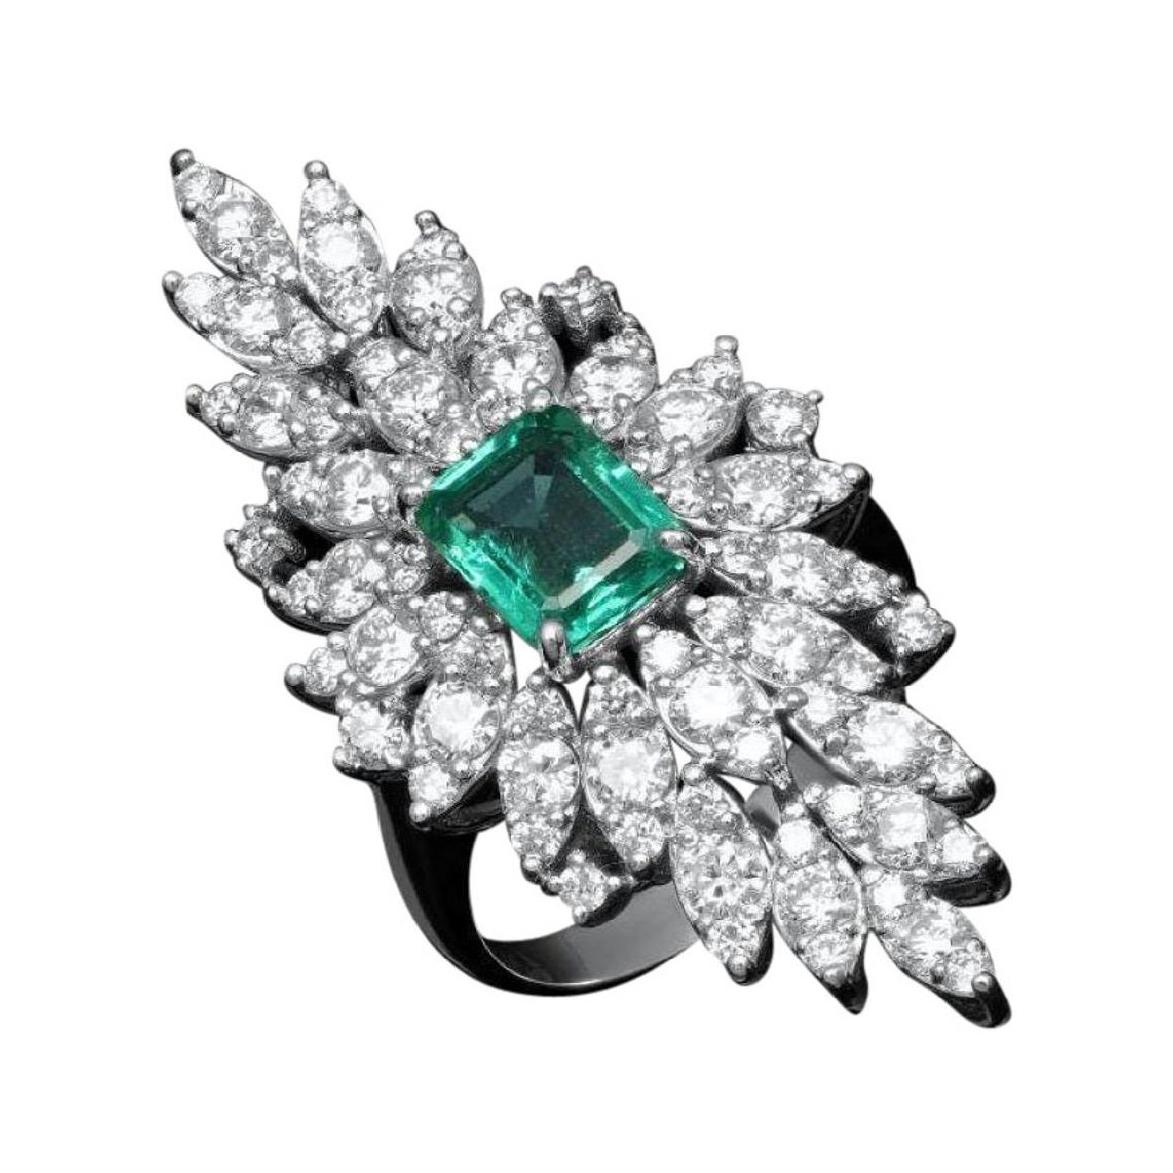 5.35 Carat Natural Emerald & Diamond 14k Solid White Gold Ring